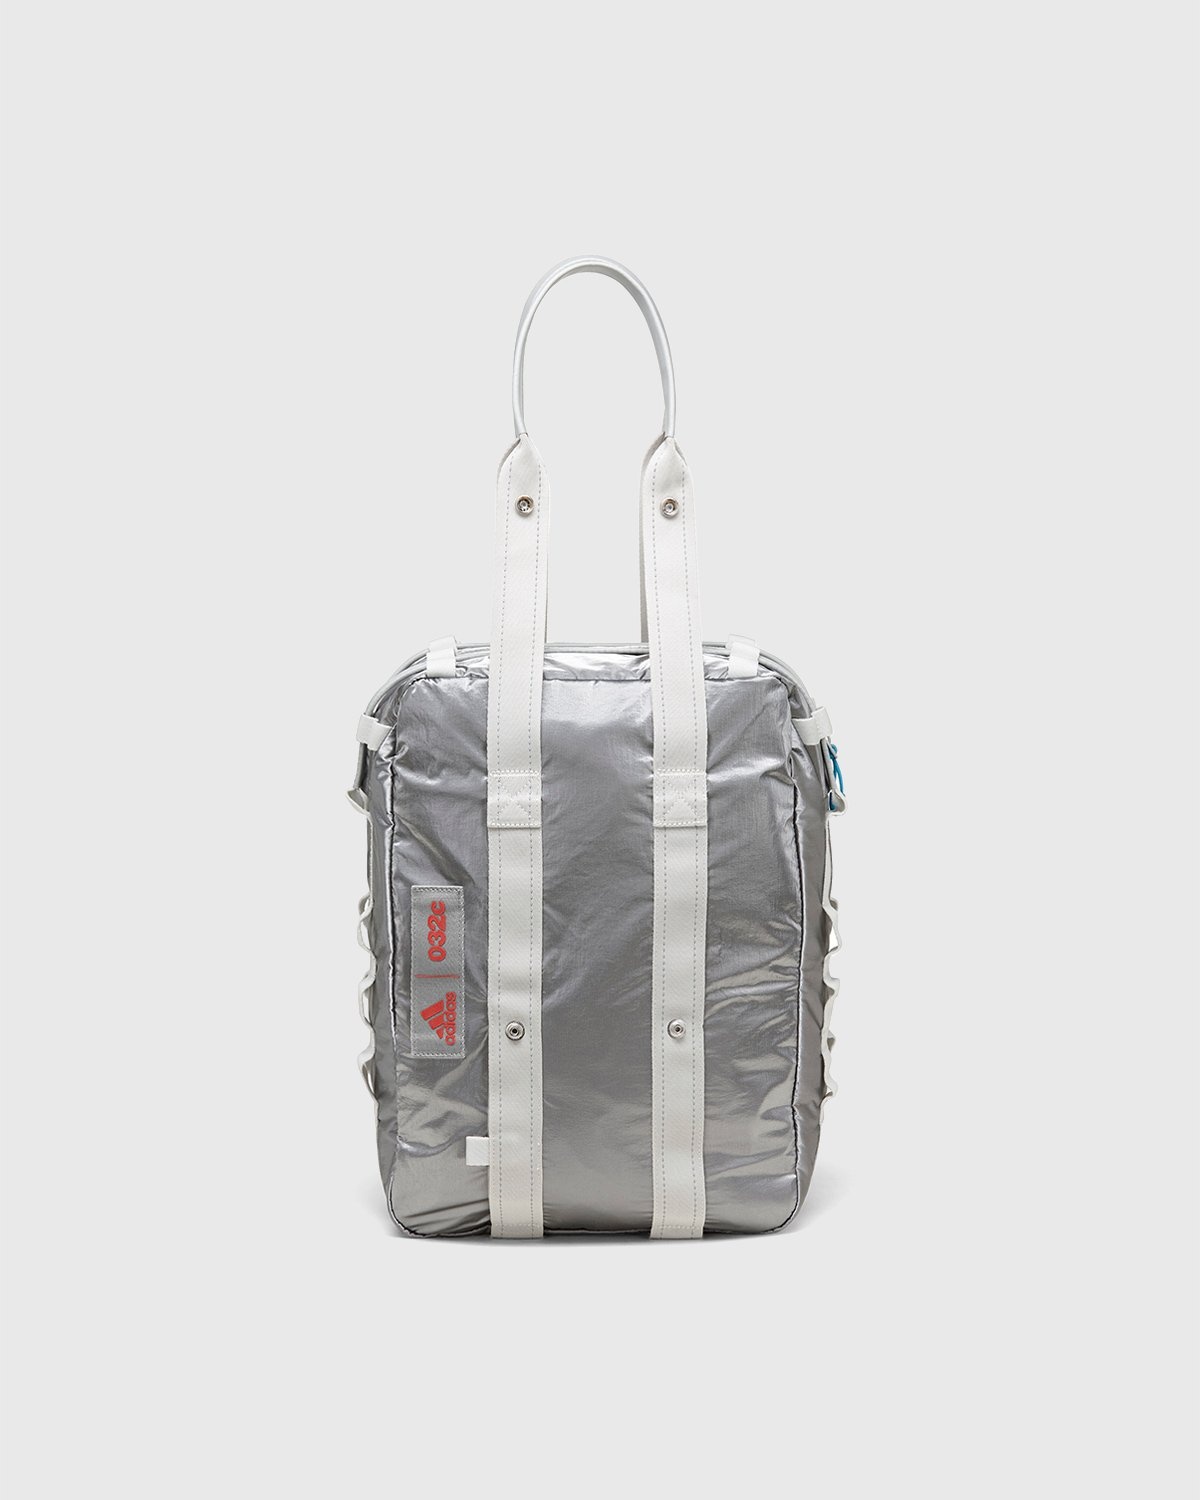 Bag To The Future Light-Up LED Duffle & Backpack Are Futuristic